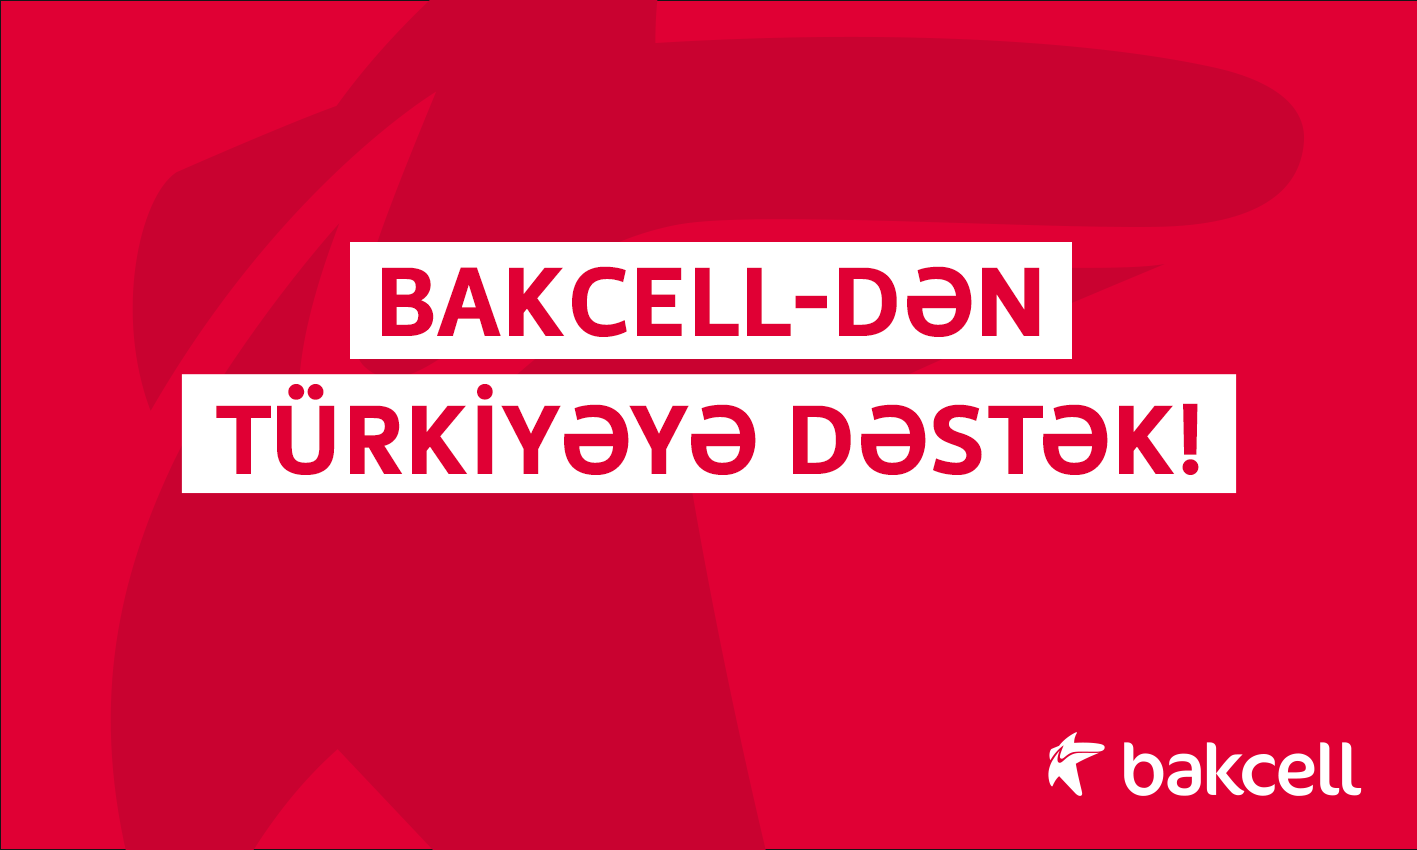 Bakcell sends special telecommunication equipment to Türkiye